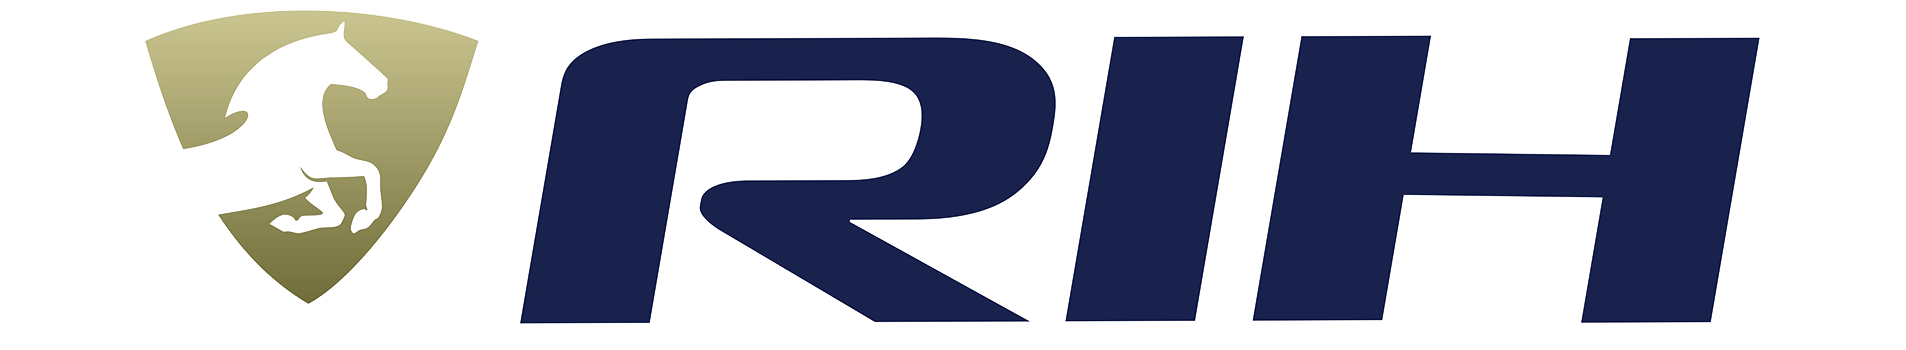 /image/data/RIH-logo-homepage.png